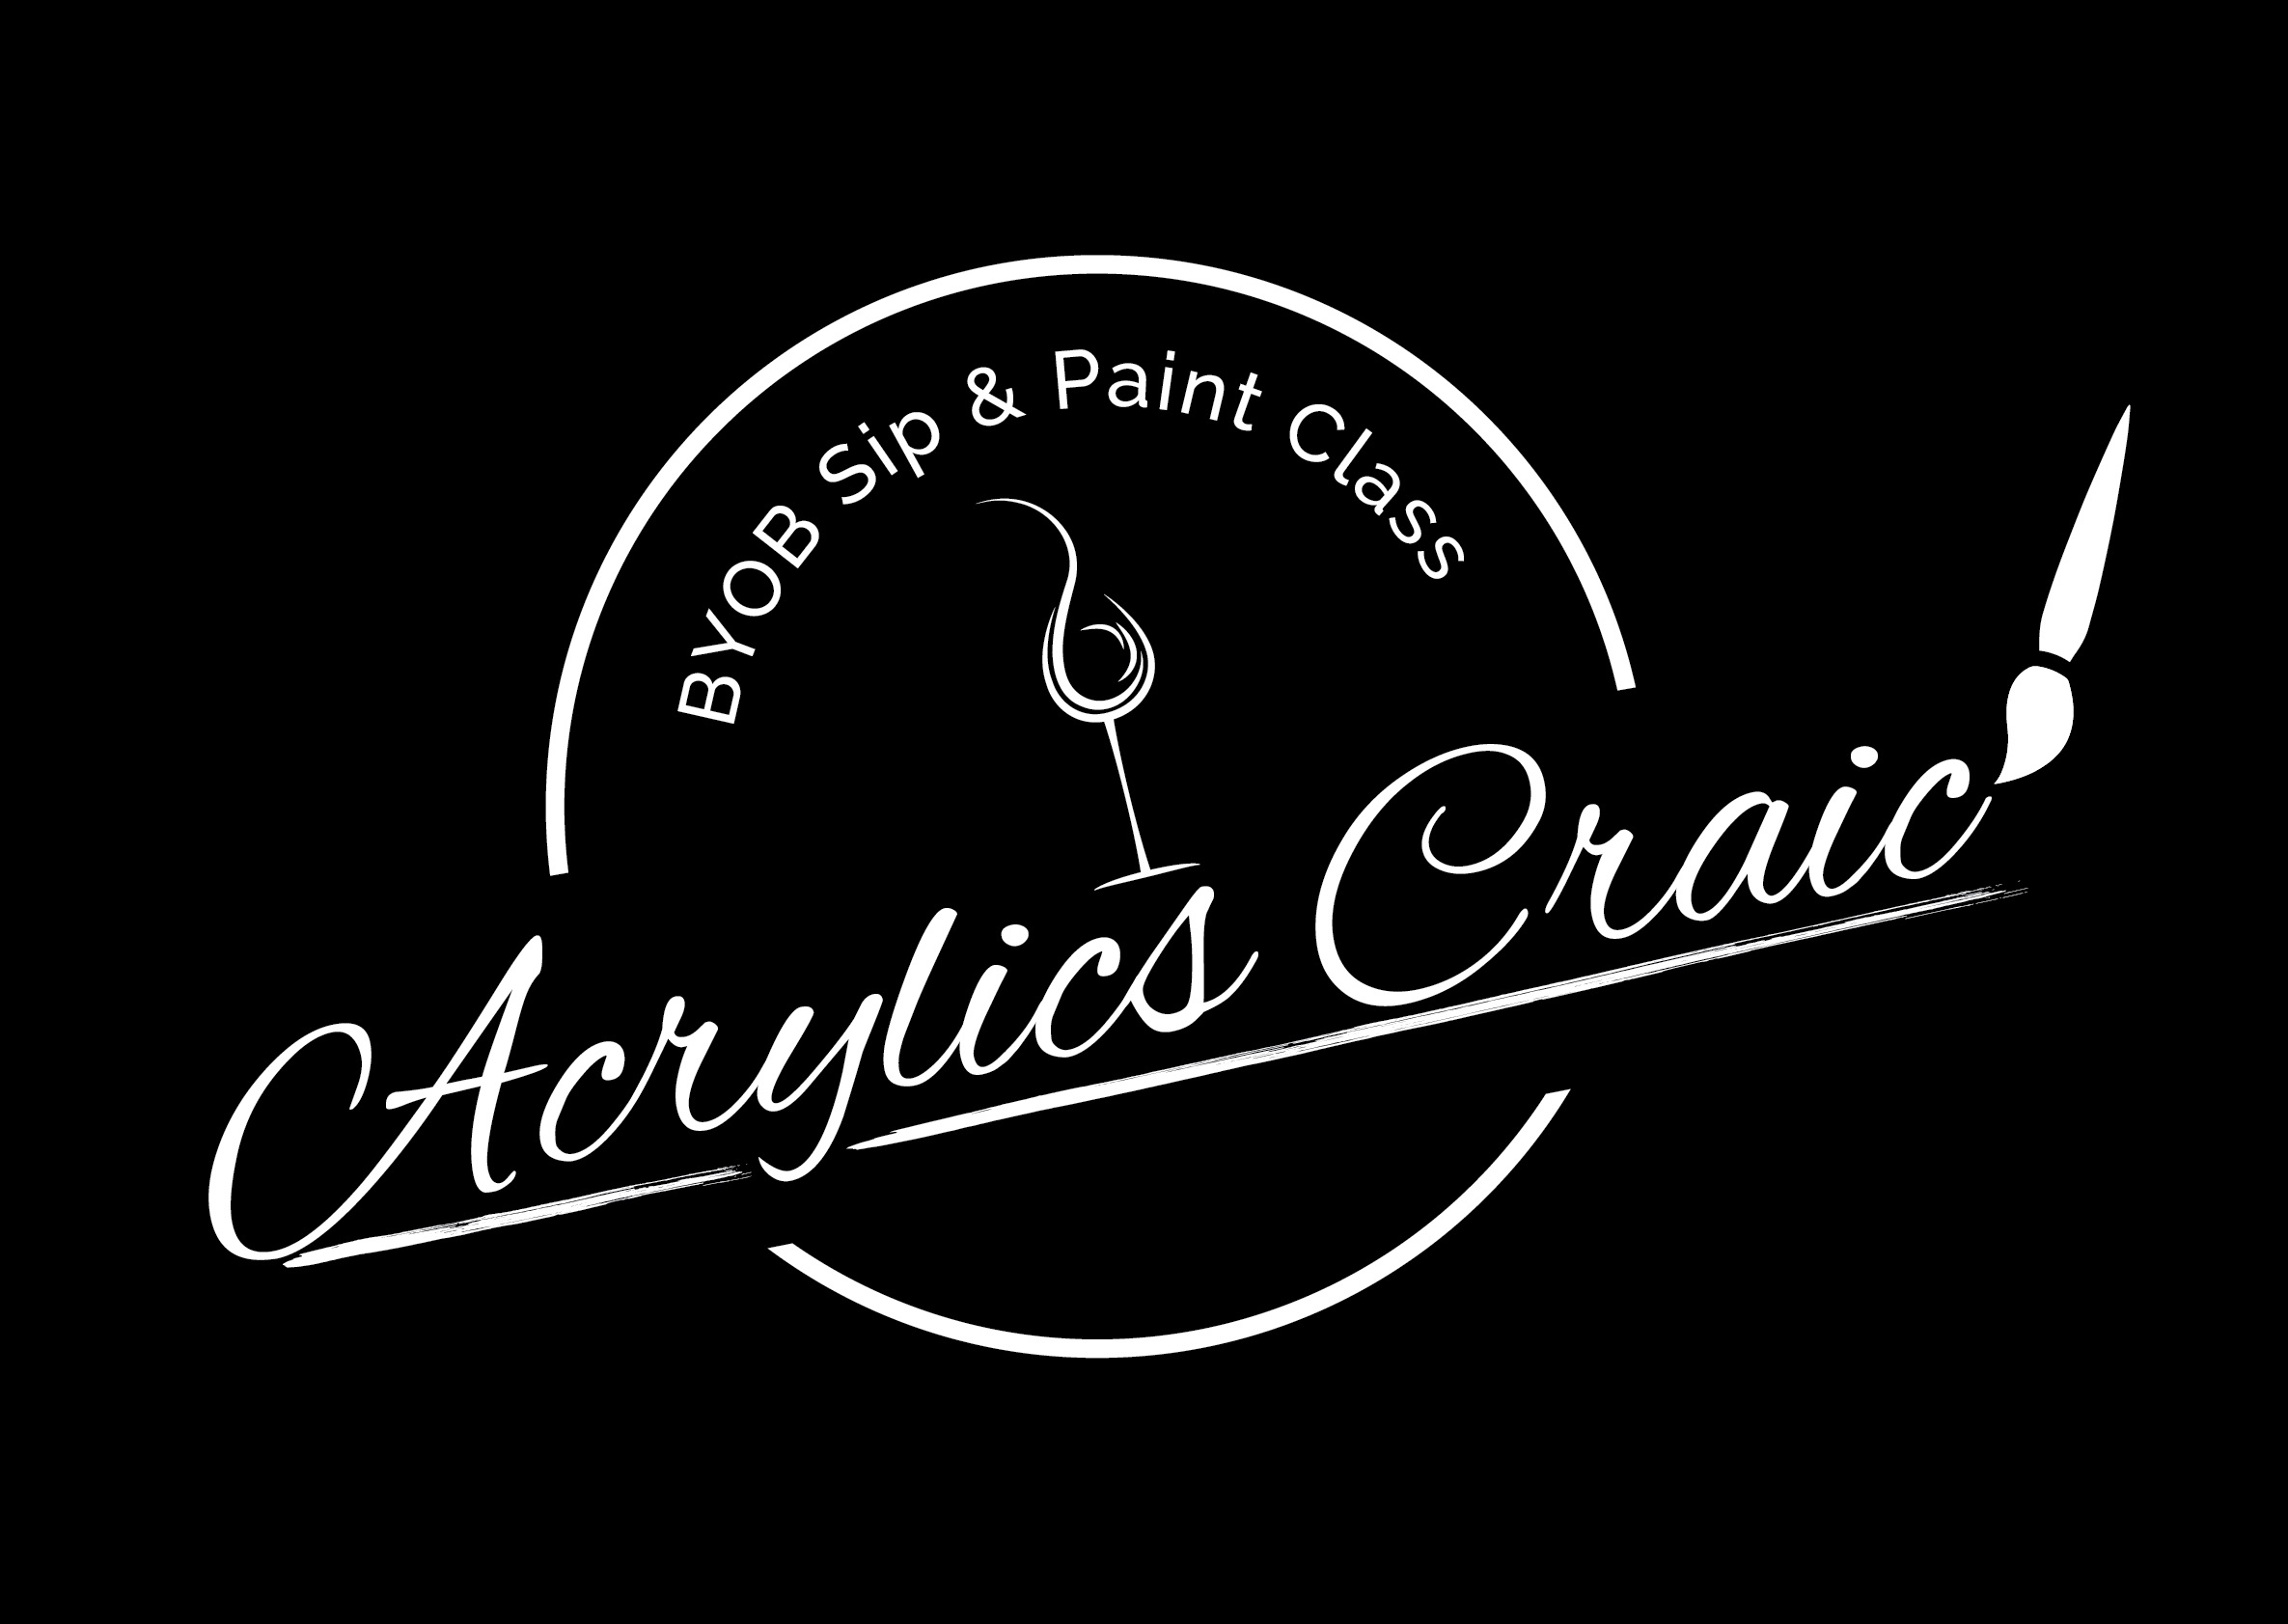 Acrylics Craic!